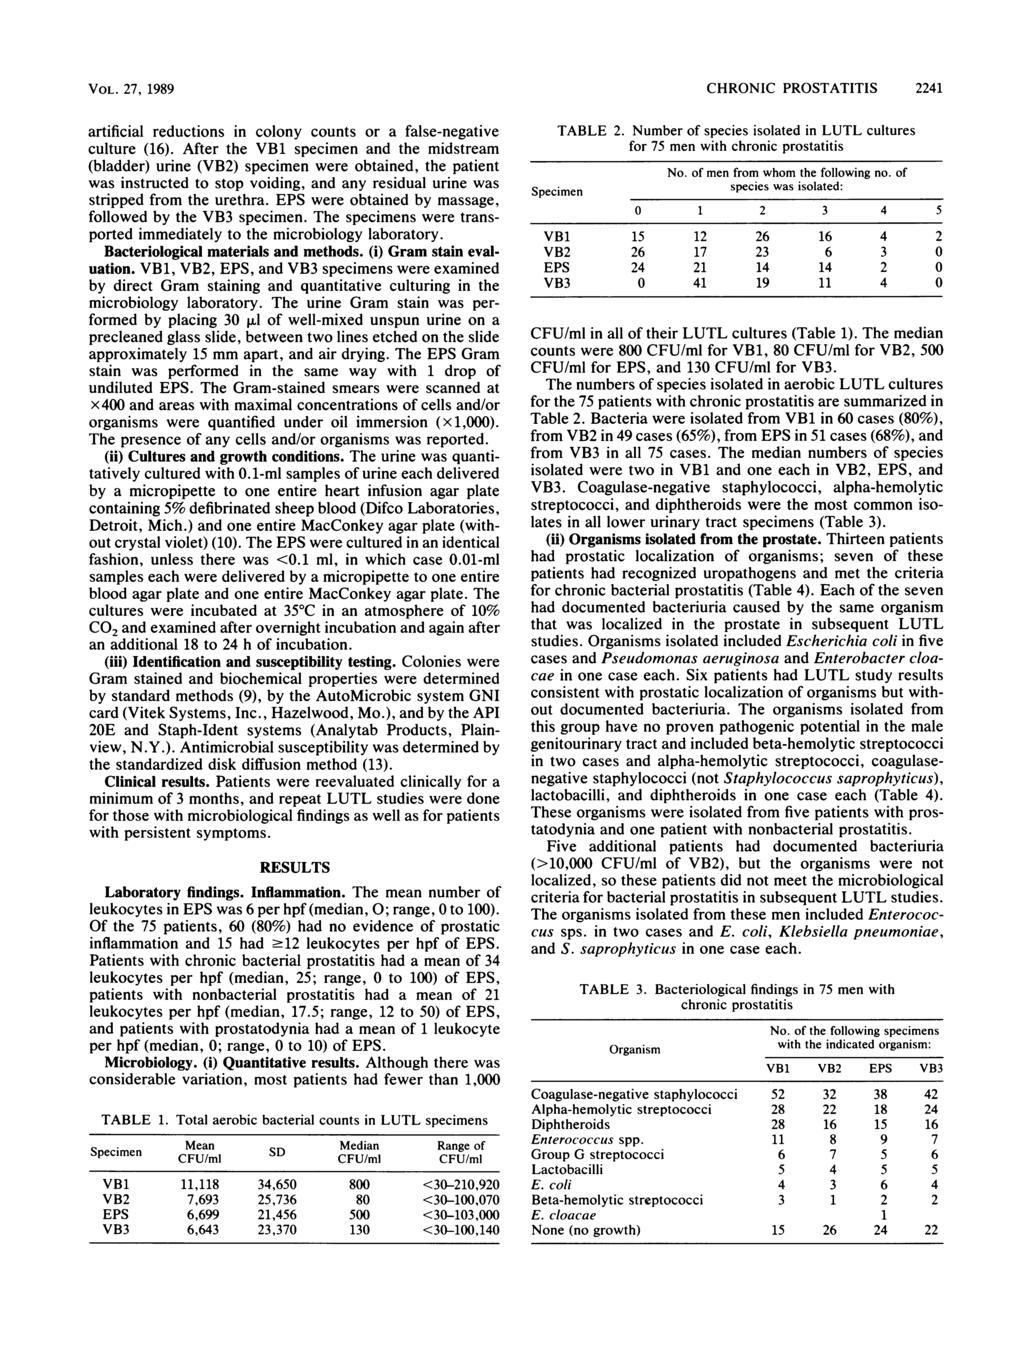 VOL. 27, 1989 artificial reductions in colony counts or a false-negative culture (16).